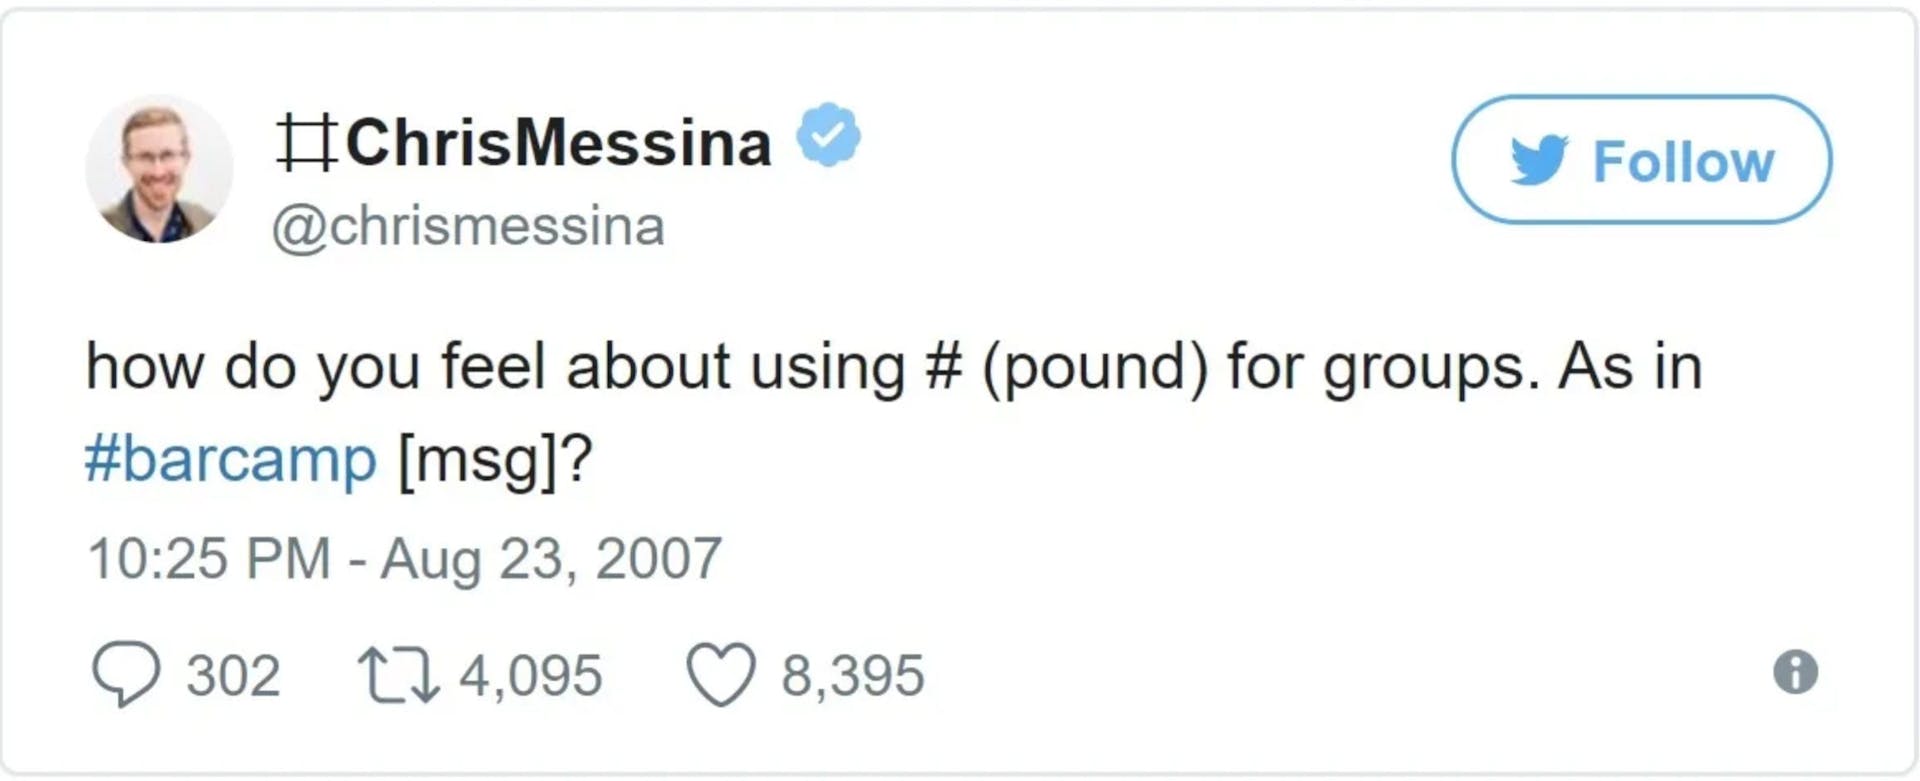 Chris Messina first hashtag post